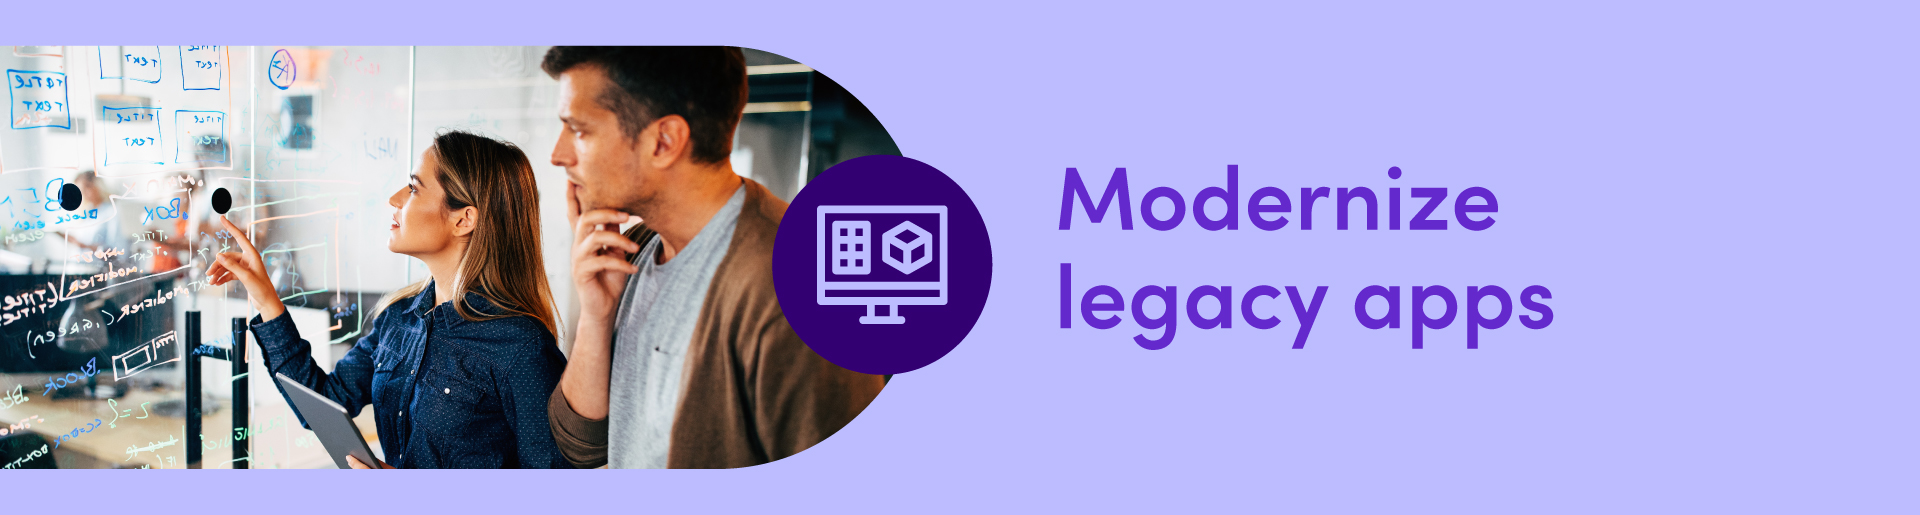 Modernize-legacy-apps